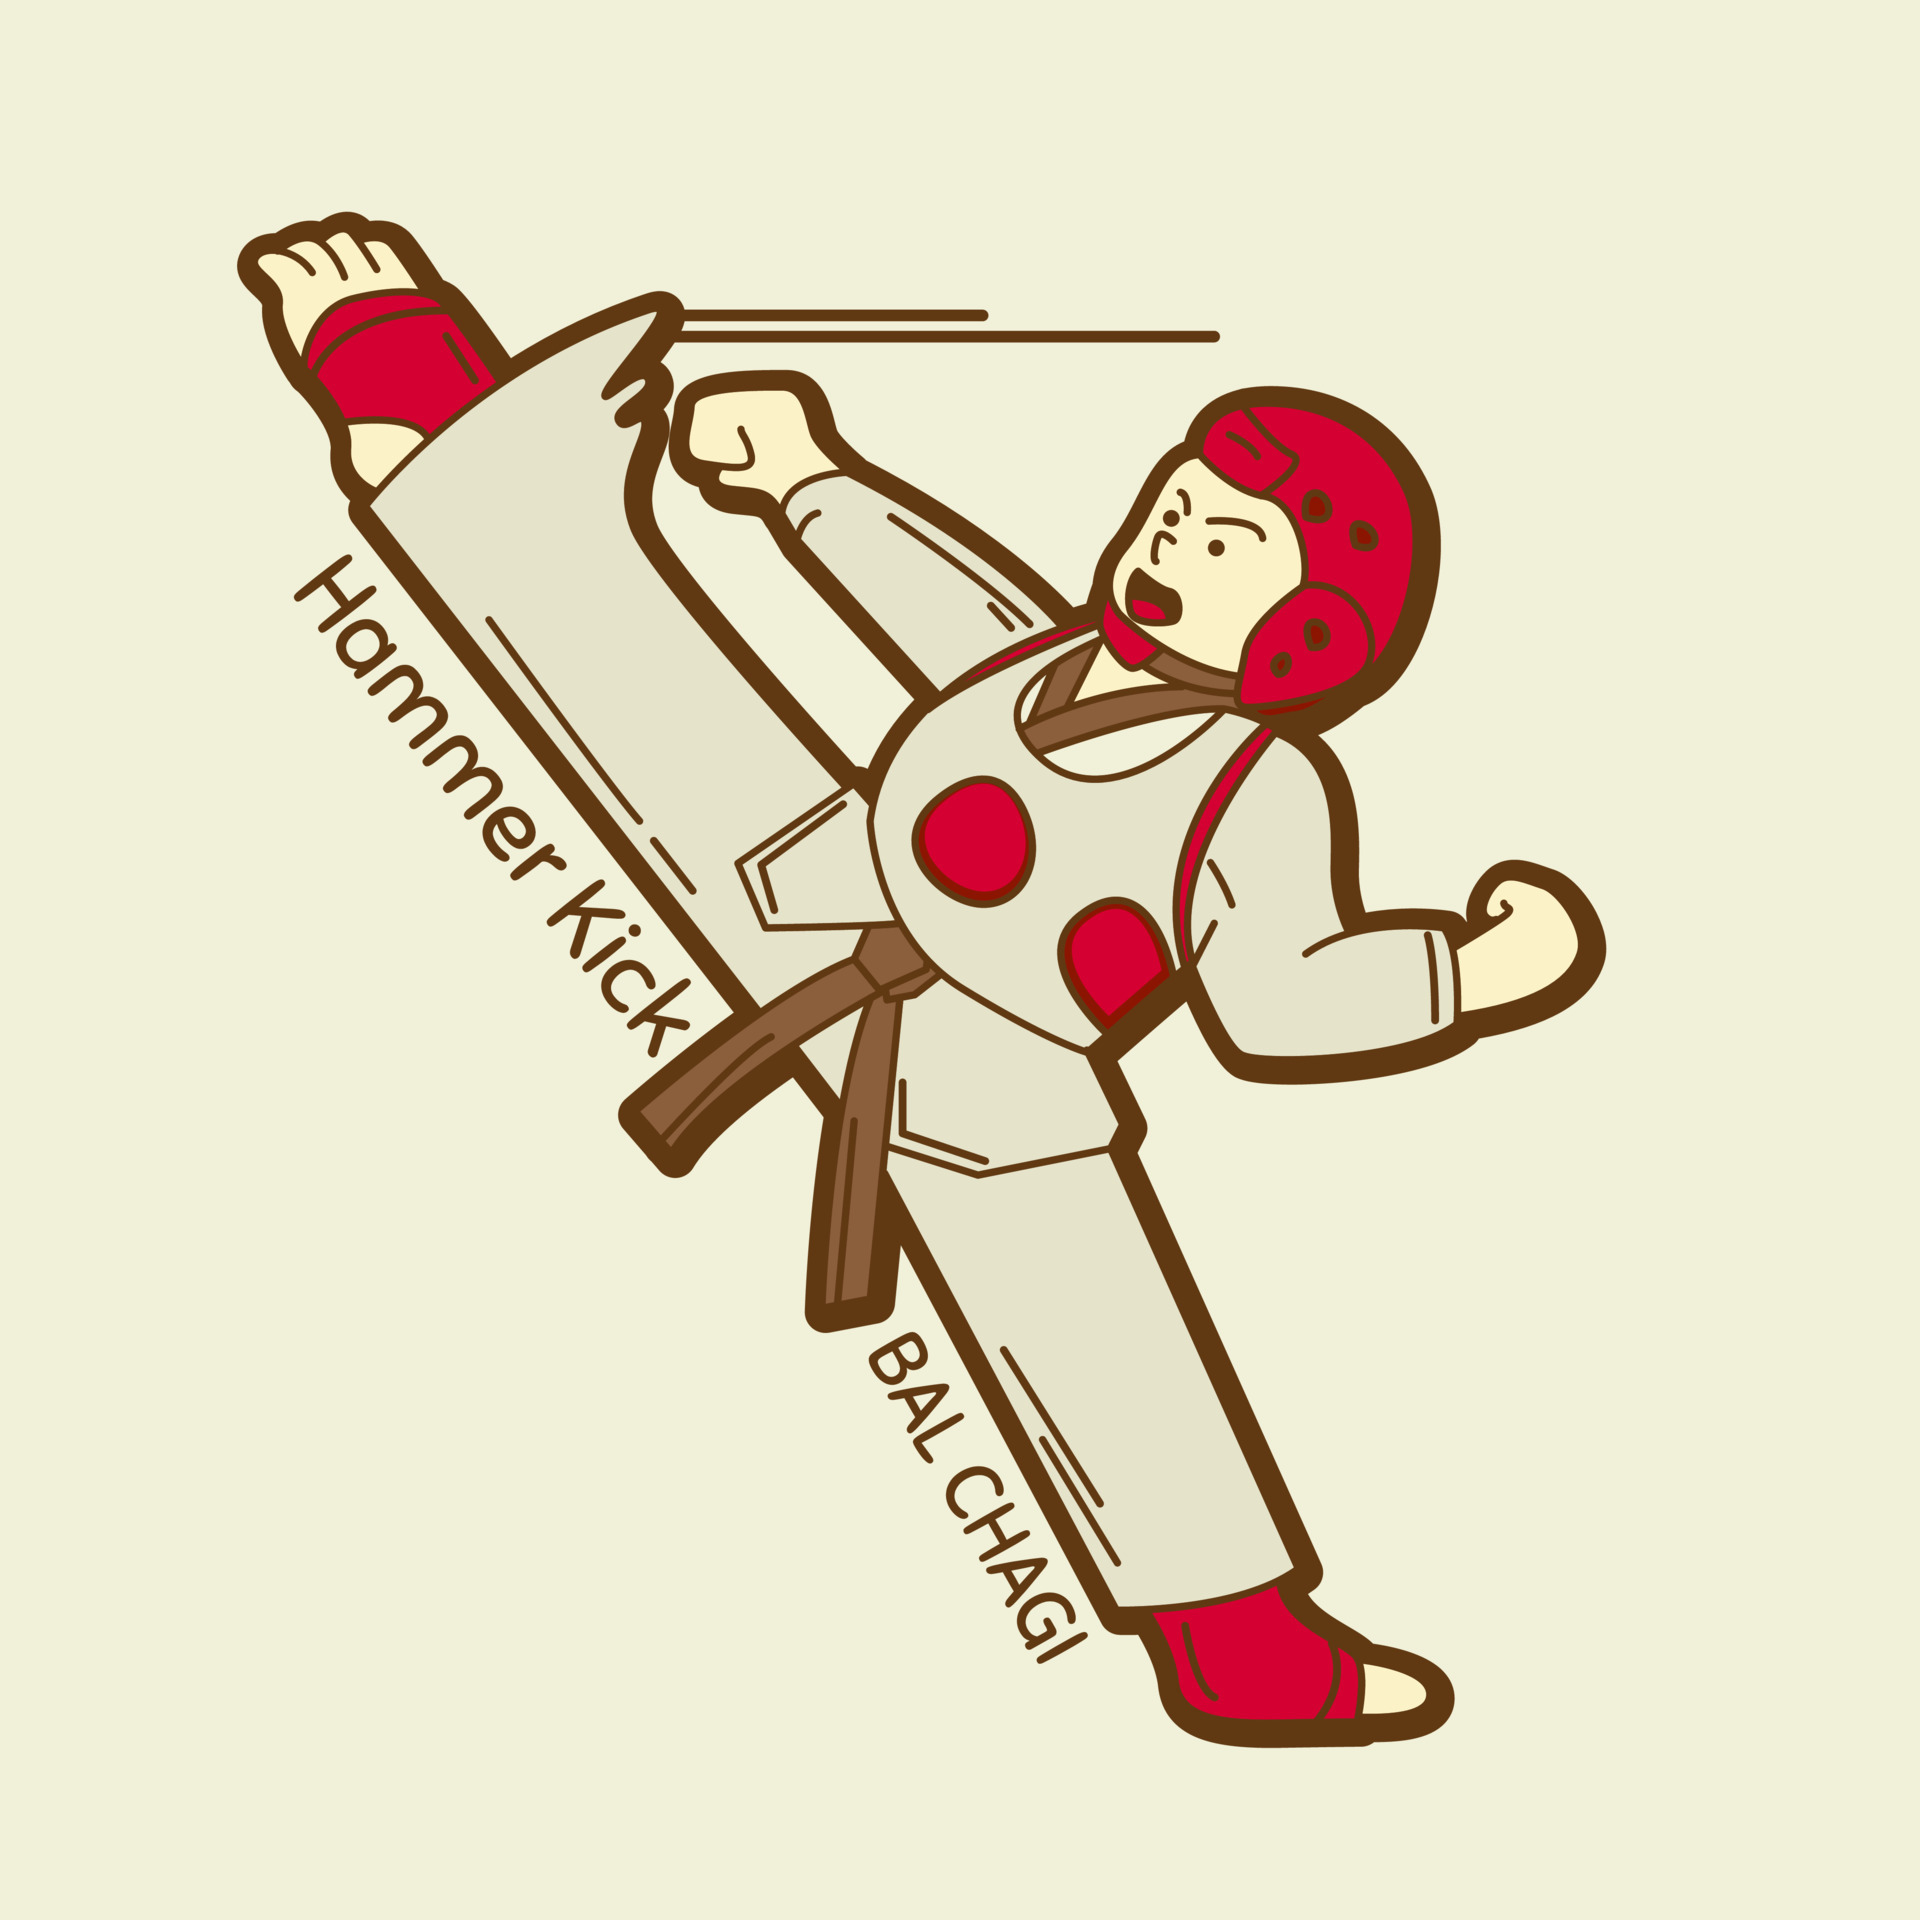 personaje de dibujos animados de niños de taekwondo en pose de patada de  martillo. adecuado para usar en productos de la comunidad de taekwondo como  camisetas, tazas, etc. 8294355 Vector en Vecteezy